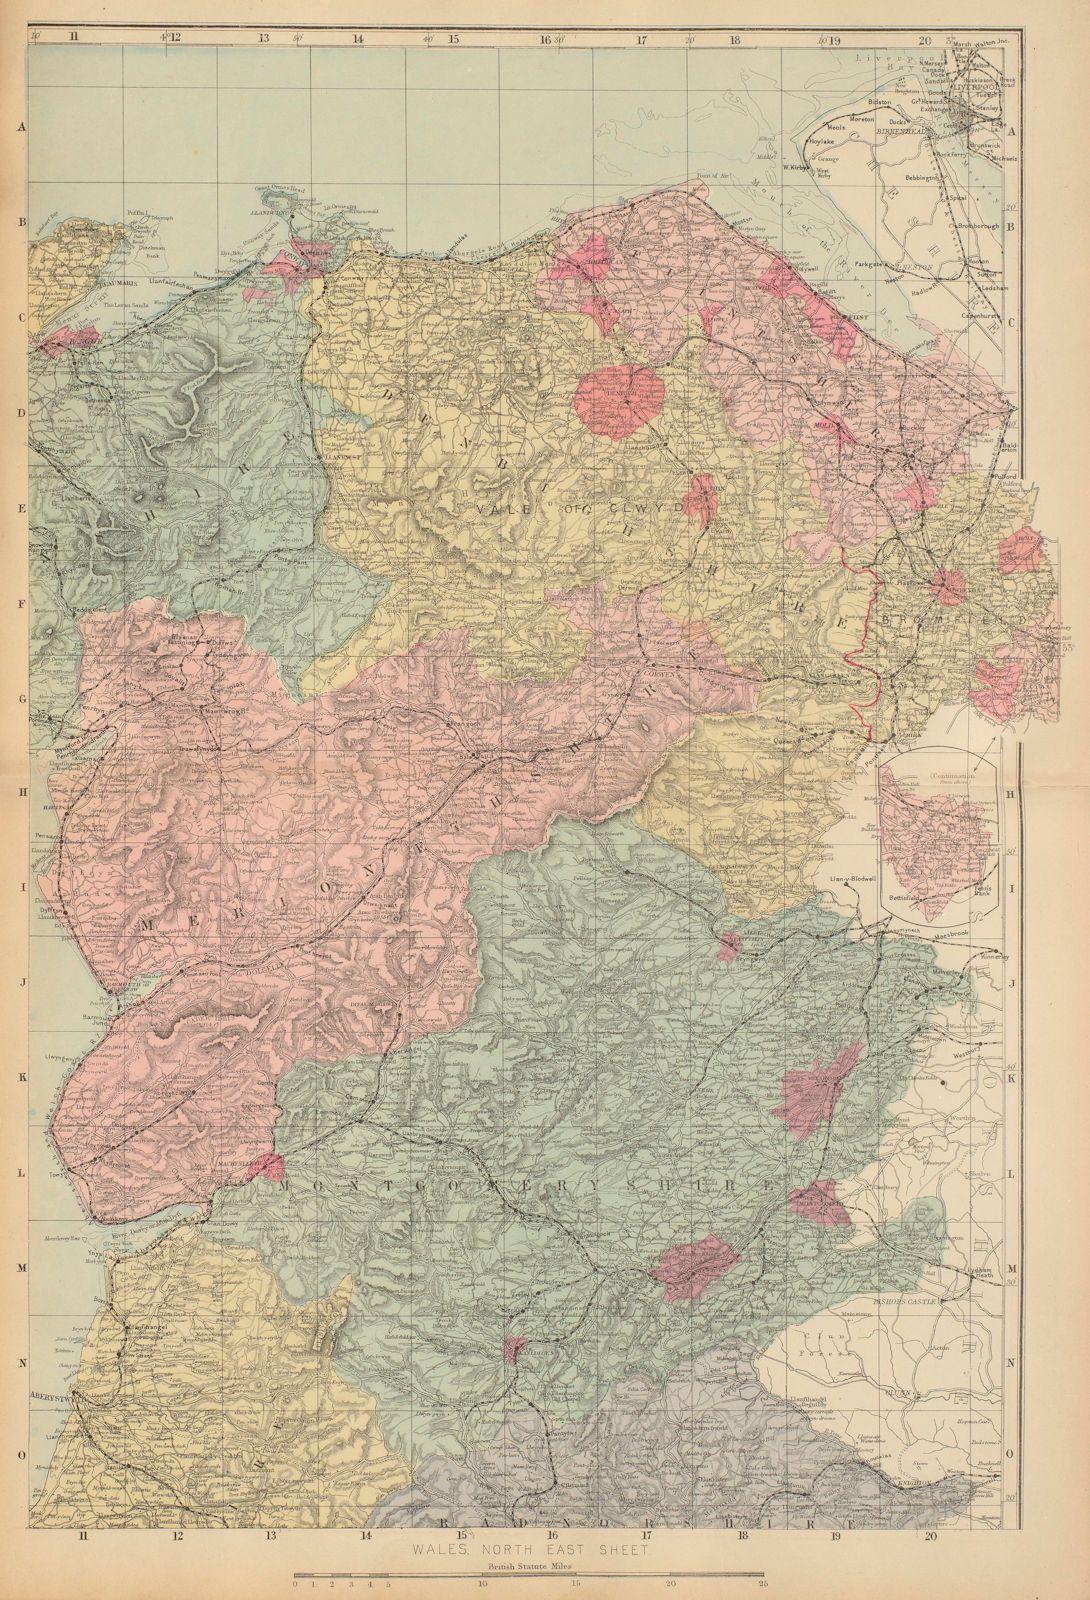 Associate Product WALES (North East) Flint Denbigh Merionethshire Clywd GW BACON 1885 old map